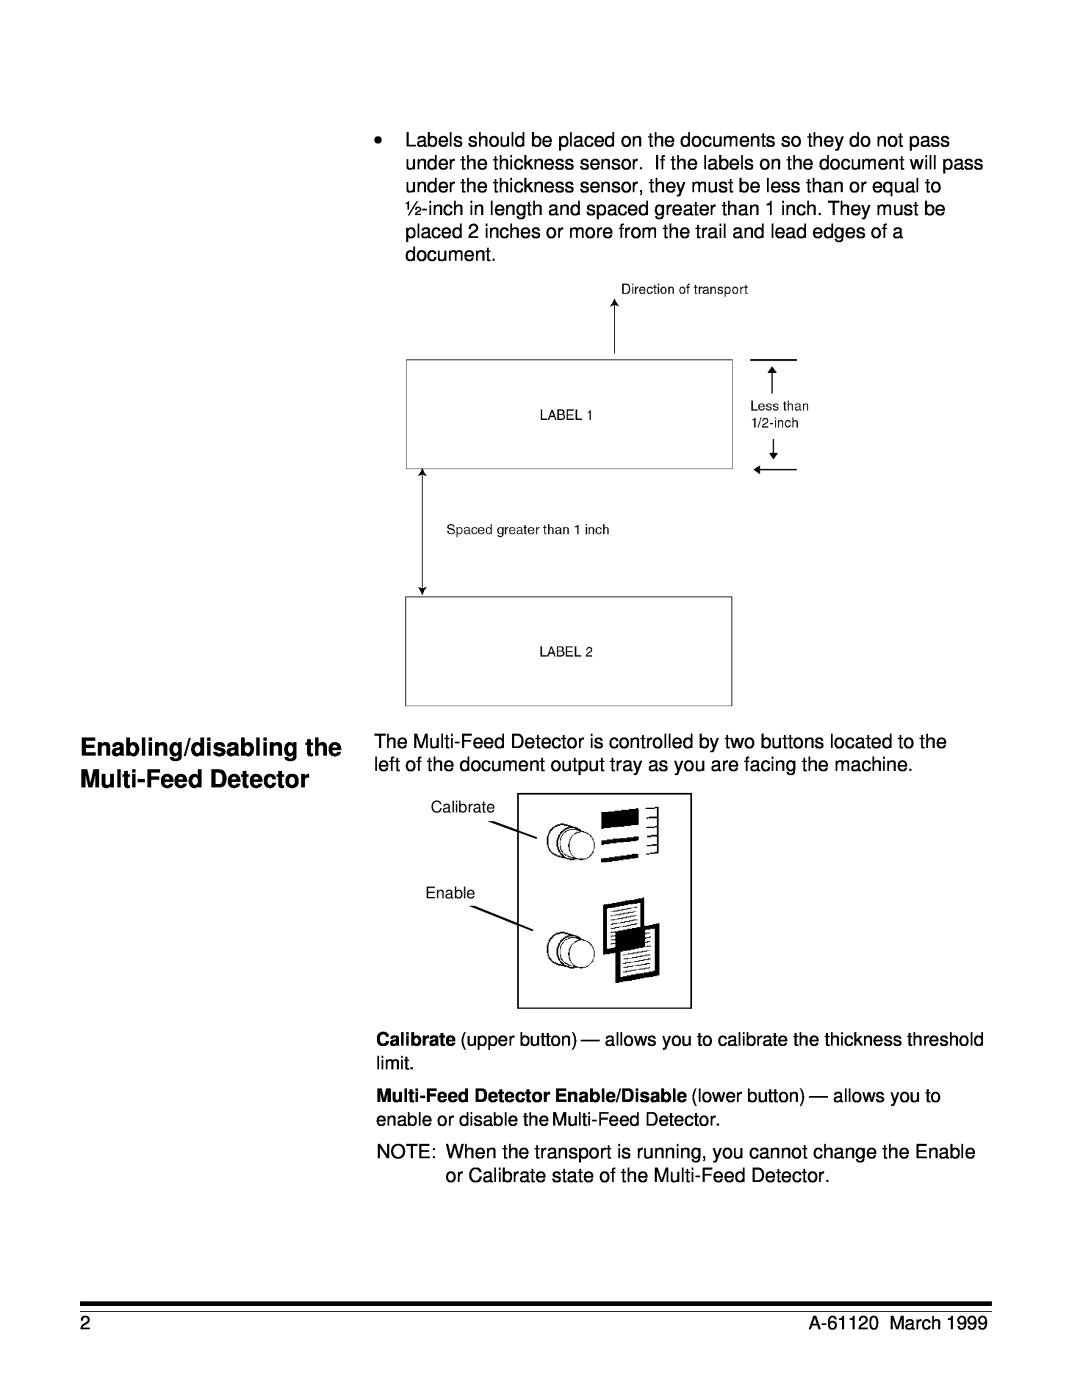 Kodak 990, 9500, 923, 70, 900 manual Enabling/disabling the Multi-FeedDetector, A-61120March 